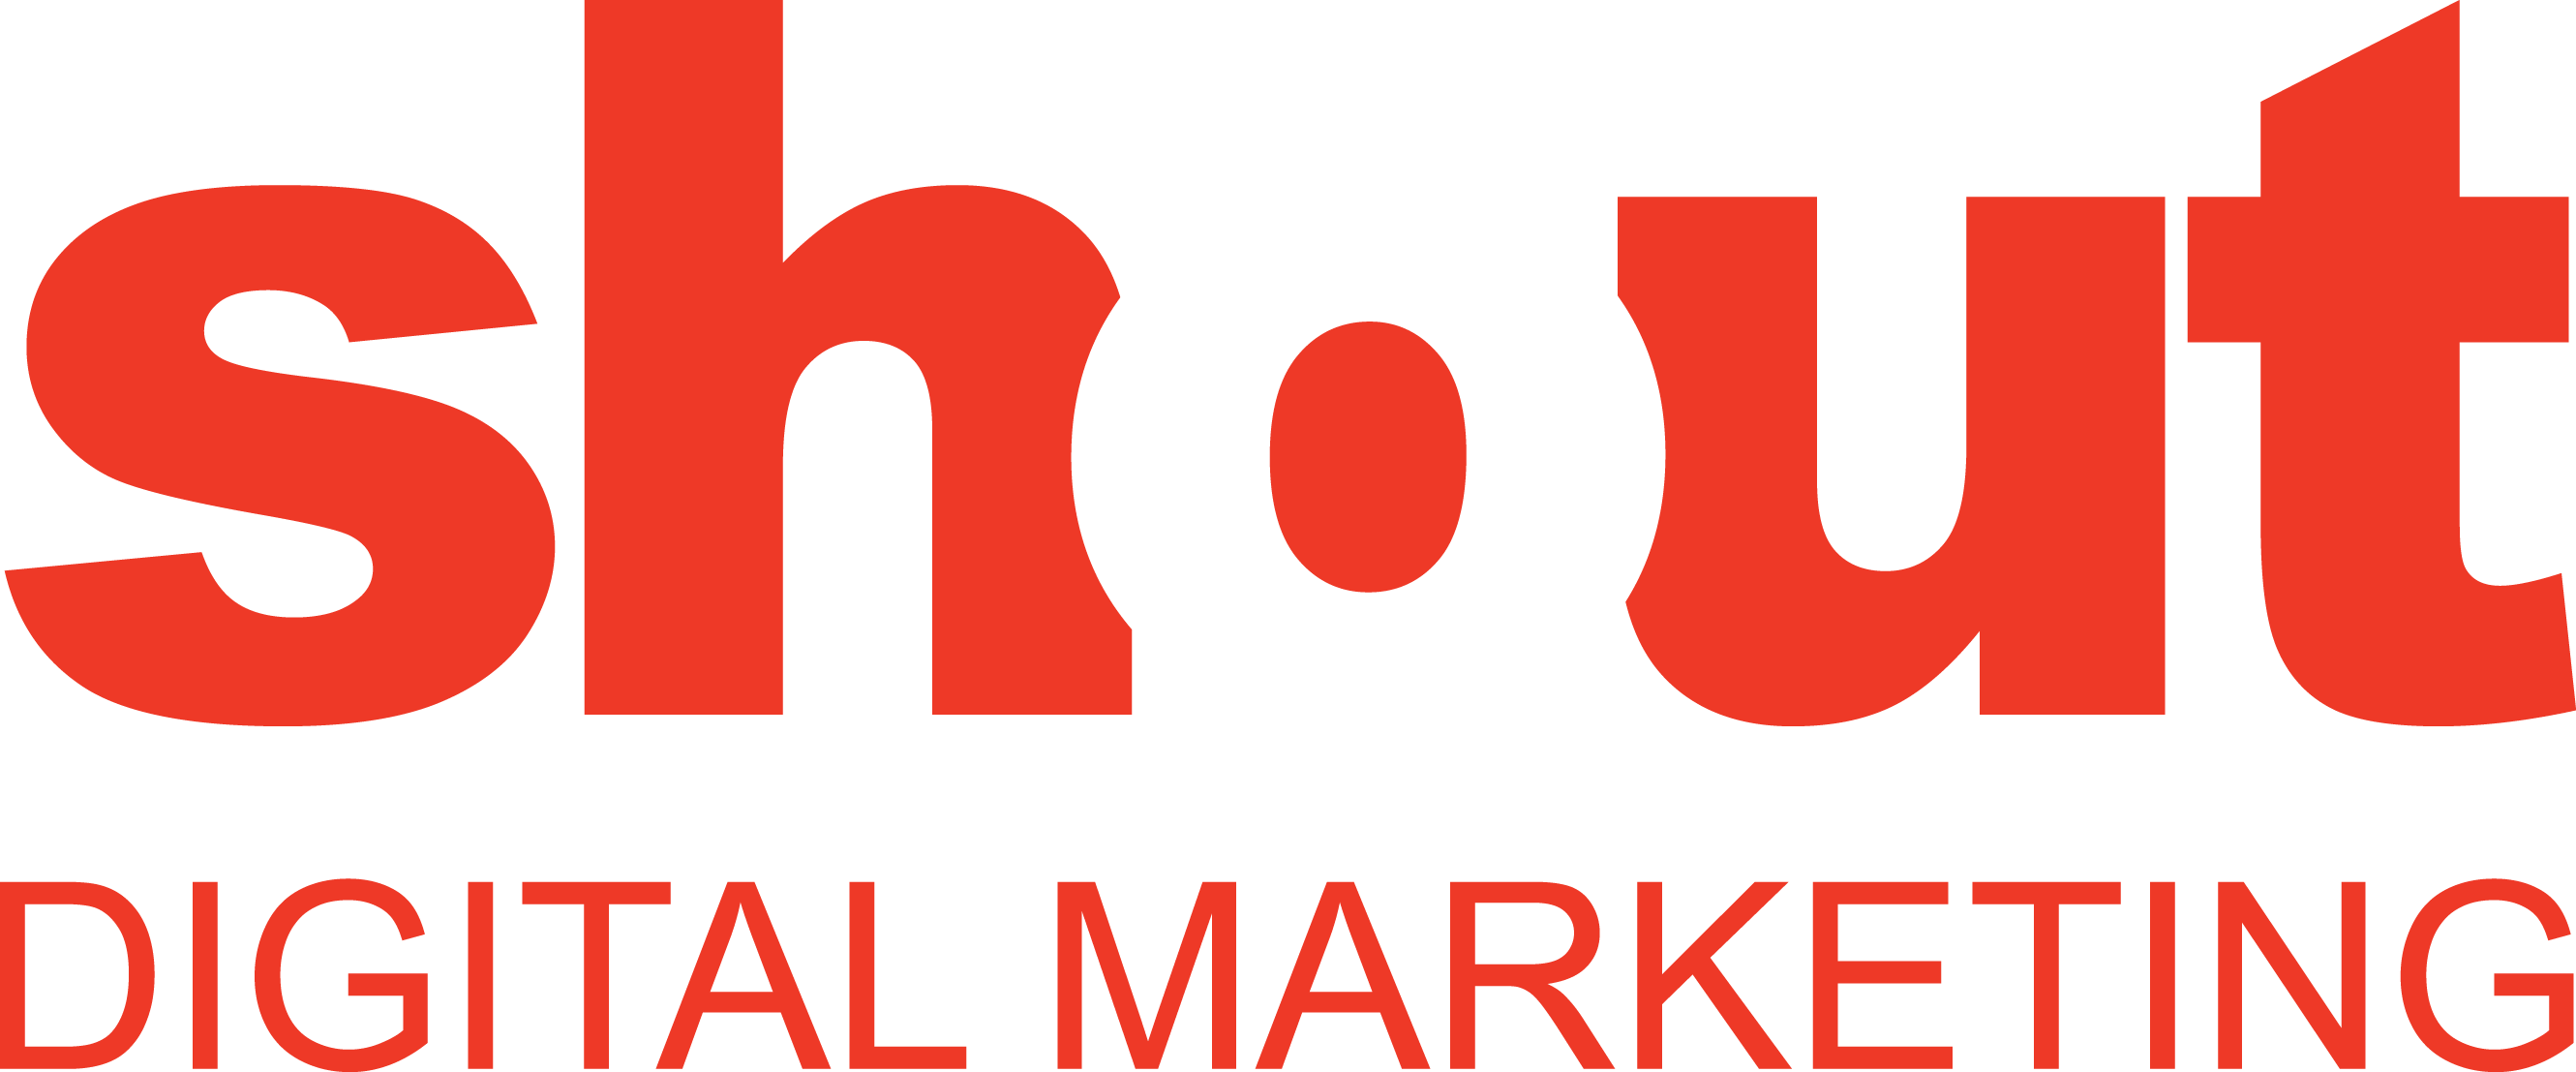 Shout Logo - SHOUT Digital Marketing